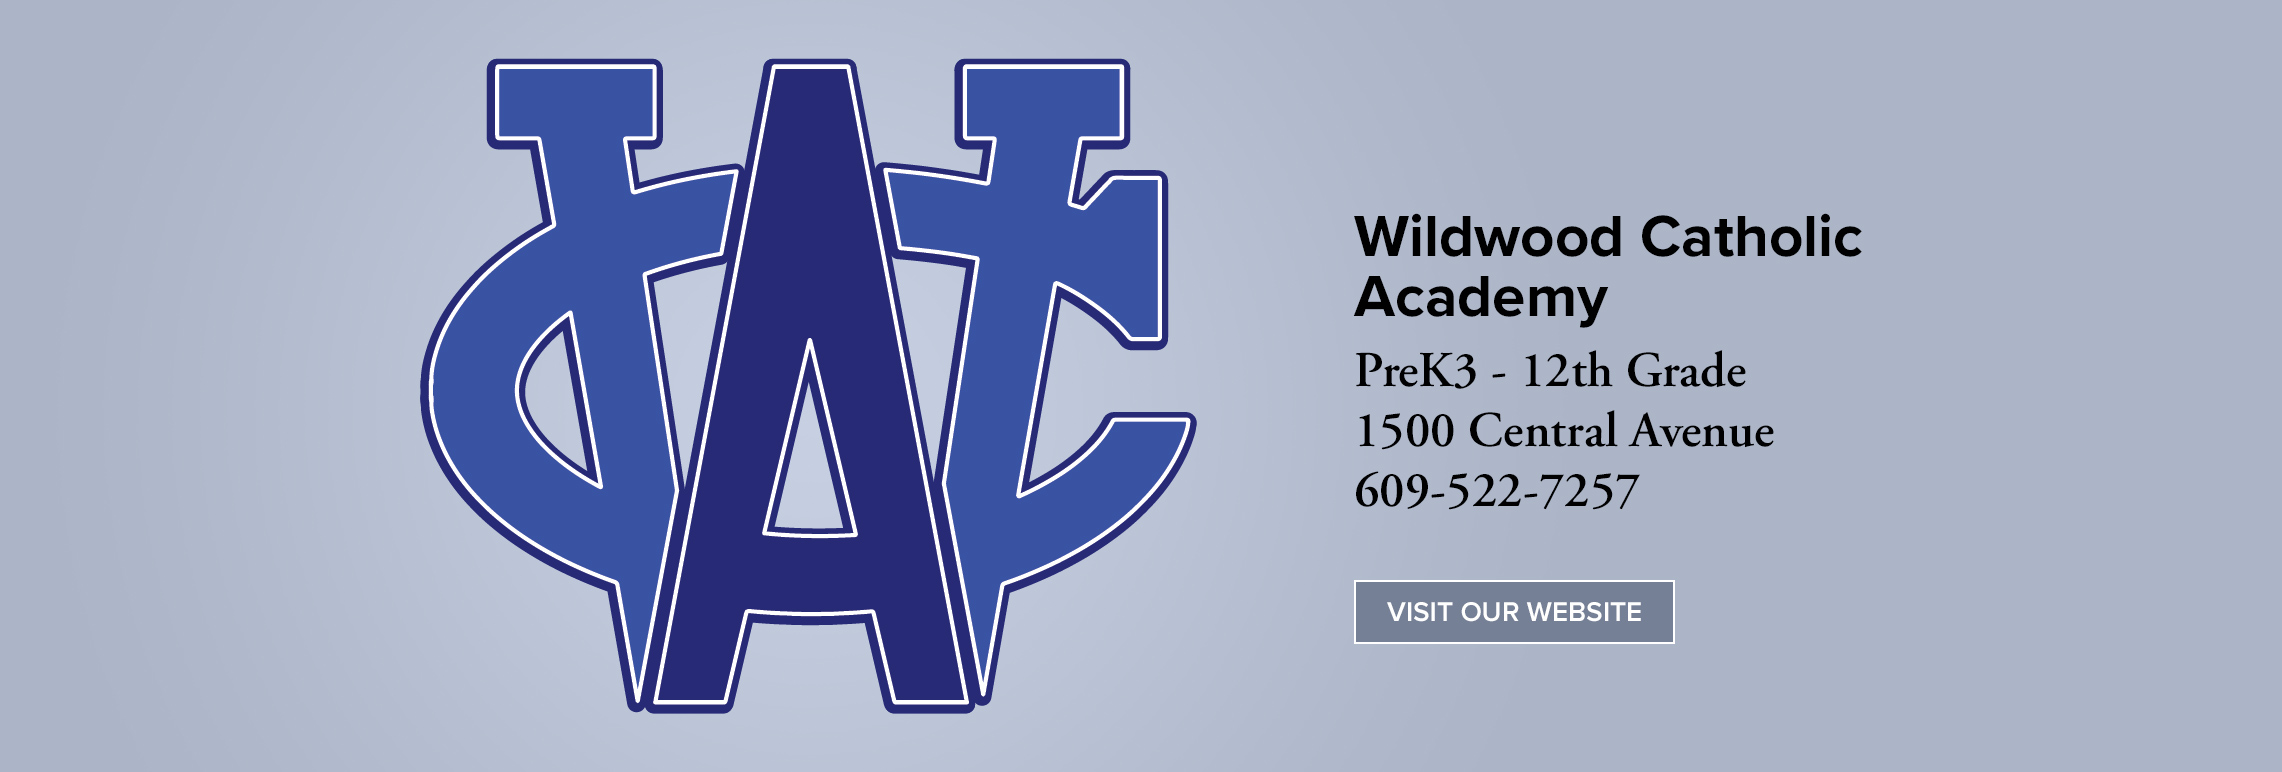 Wildwood Catholic Academy